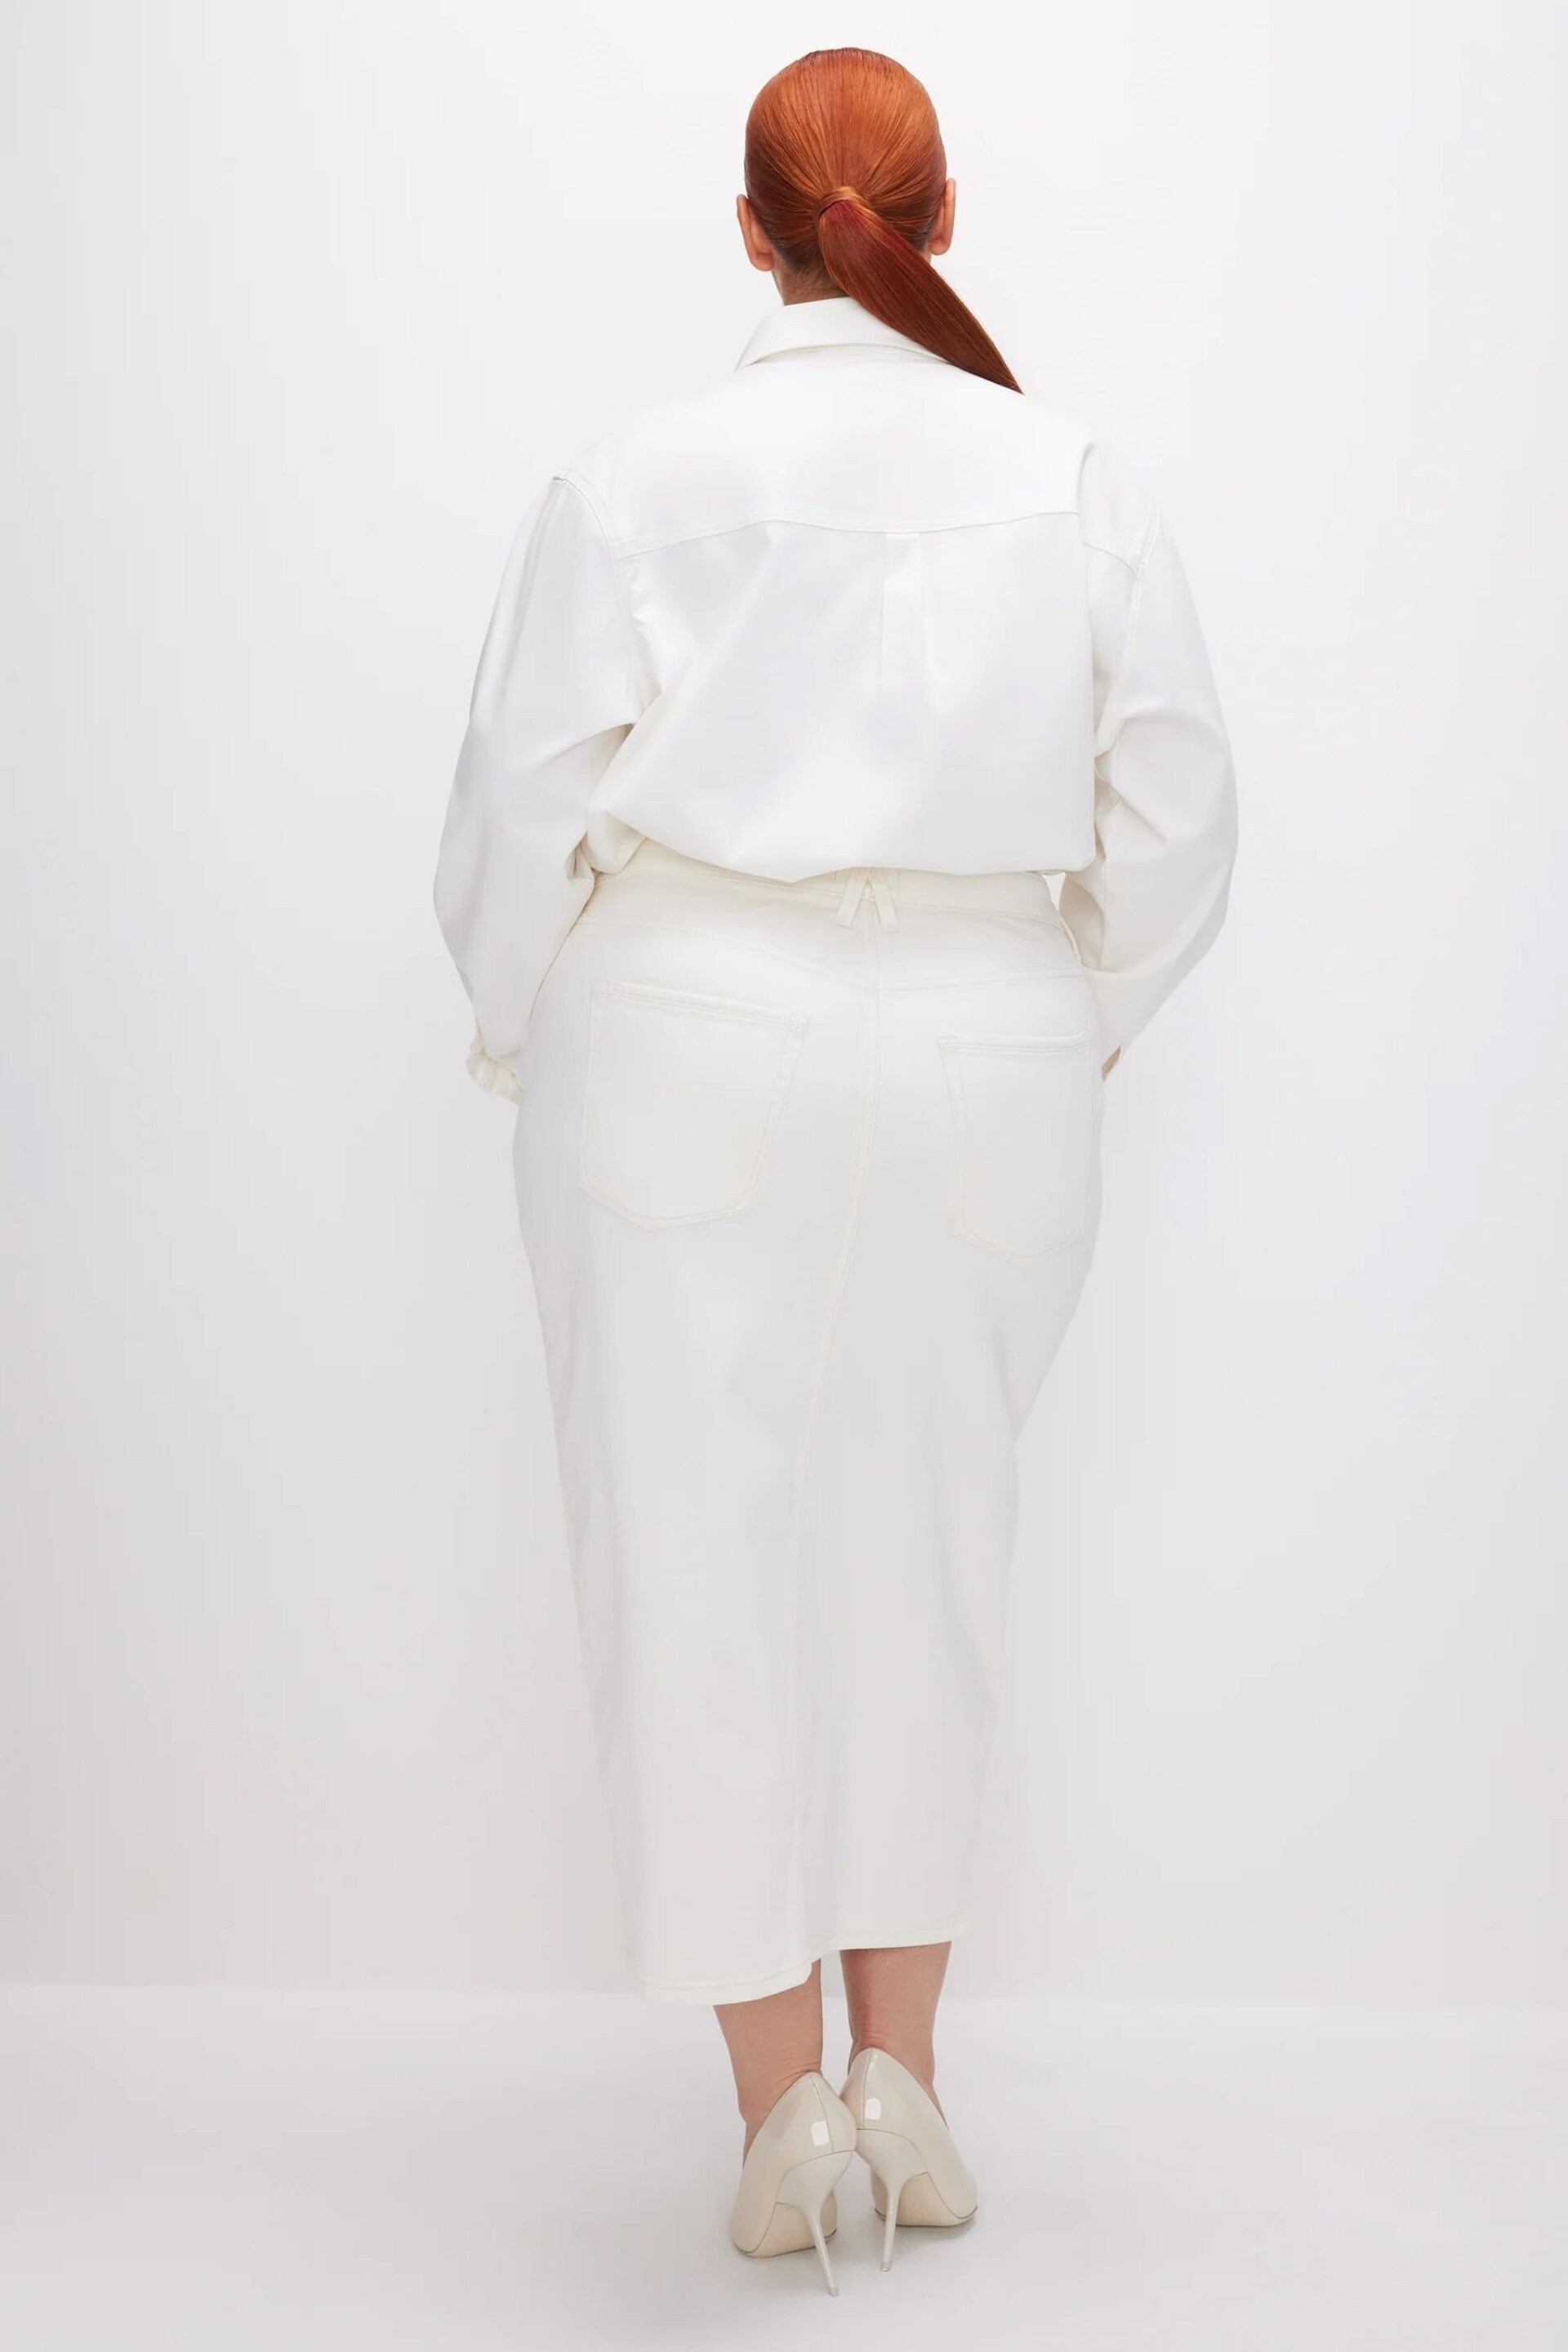 Good American White Midi Skirt - Image 4 of 7